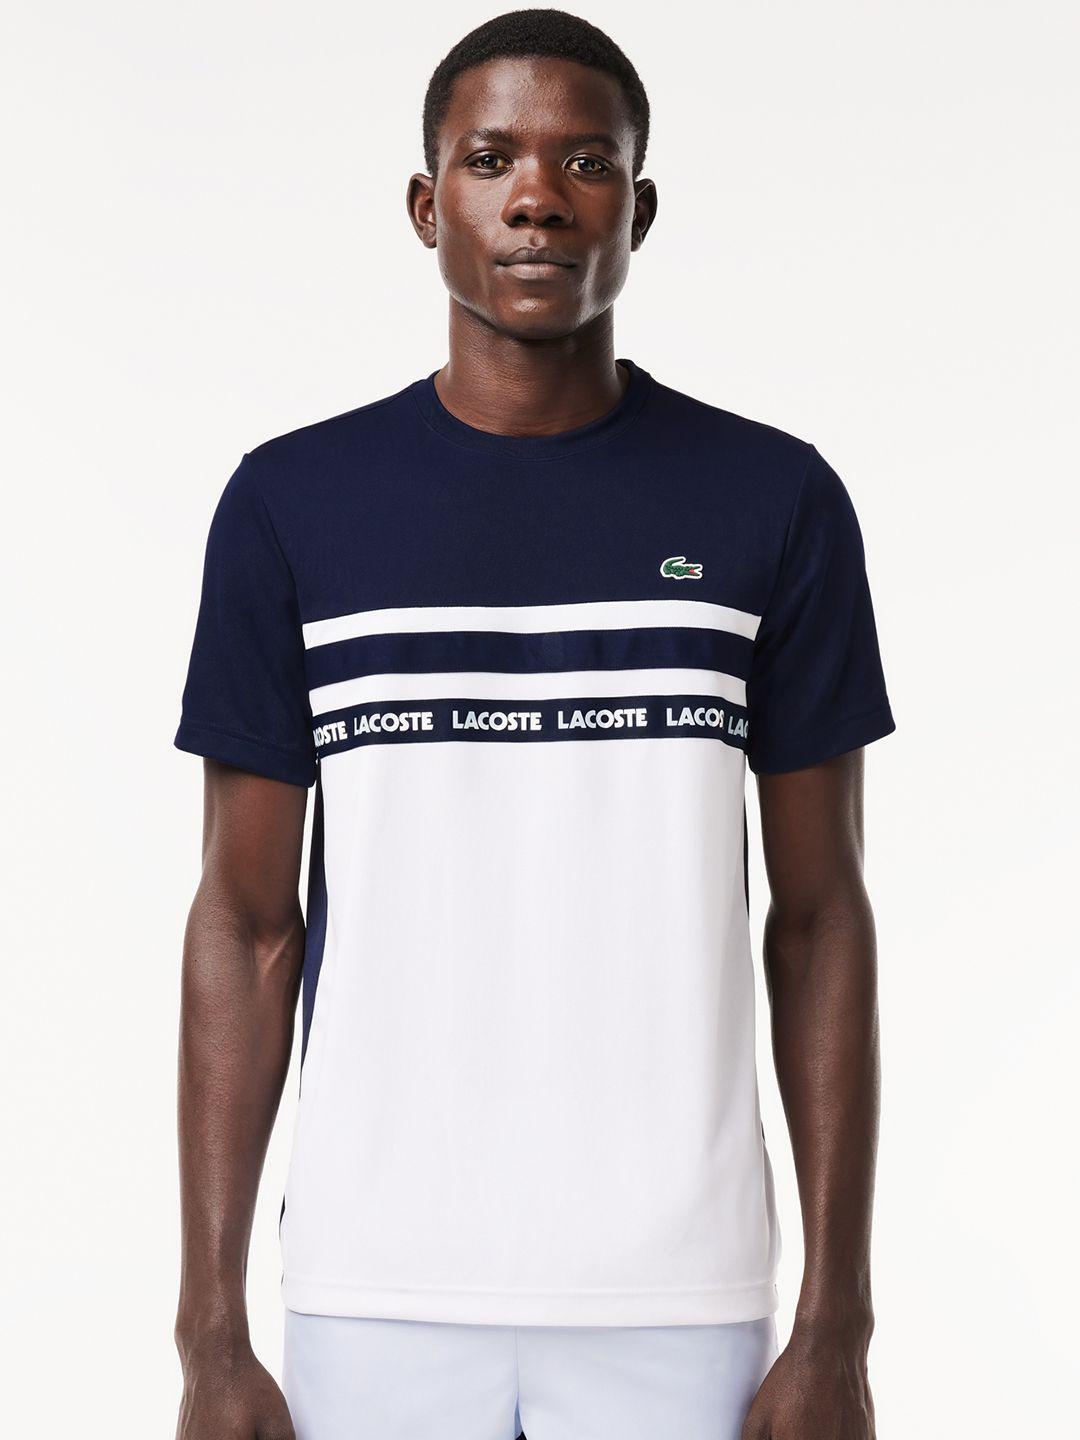 lacoste tennis performance ultra-dry logo printed t-shirt